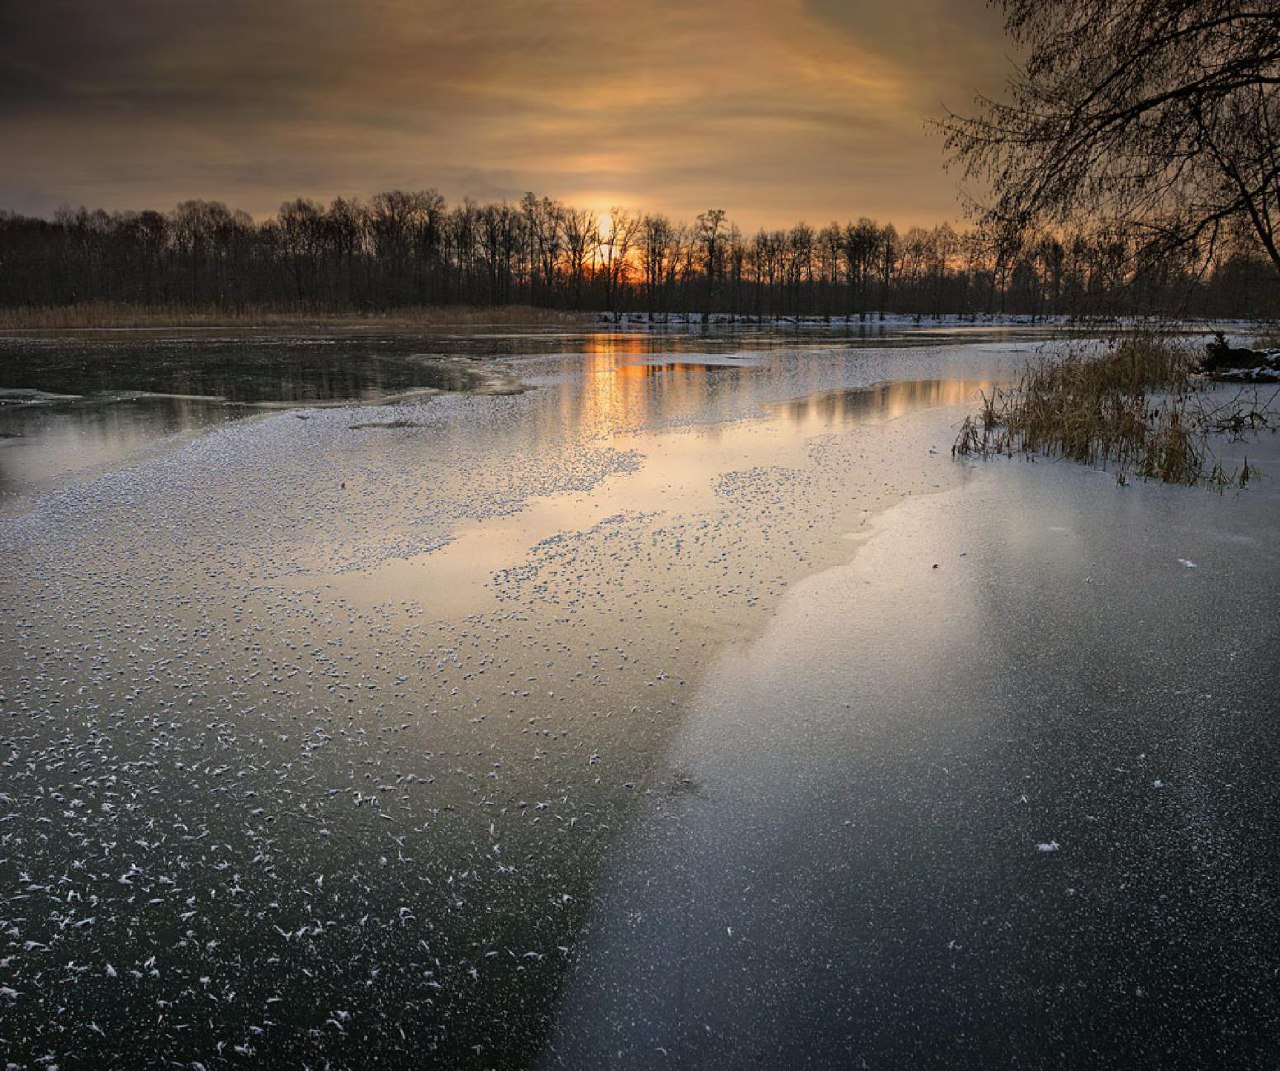 Вода в реке замерзла. Лед на реке. Лед на речке. Осенняя река тонкий лед. Речка покрытая льдом.